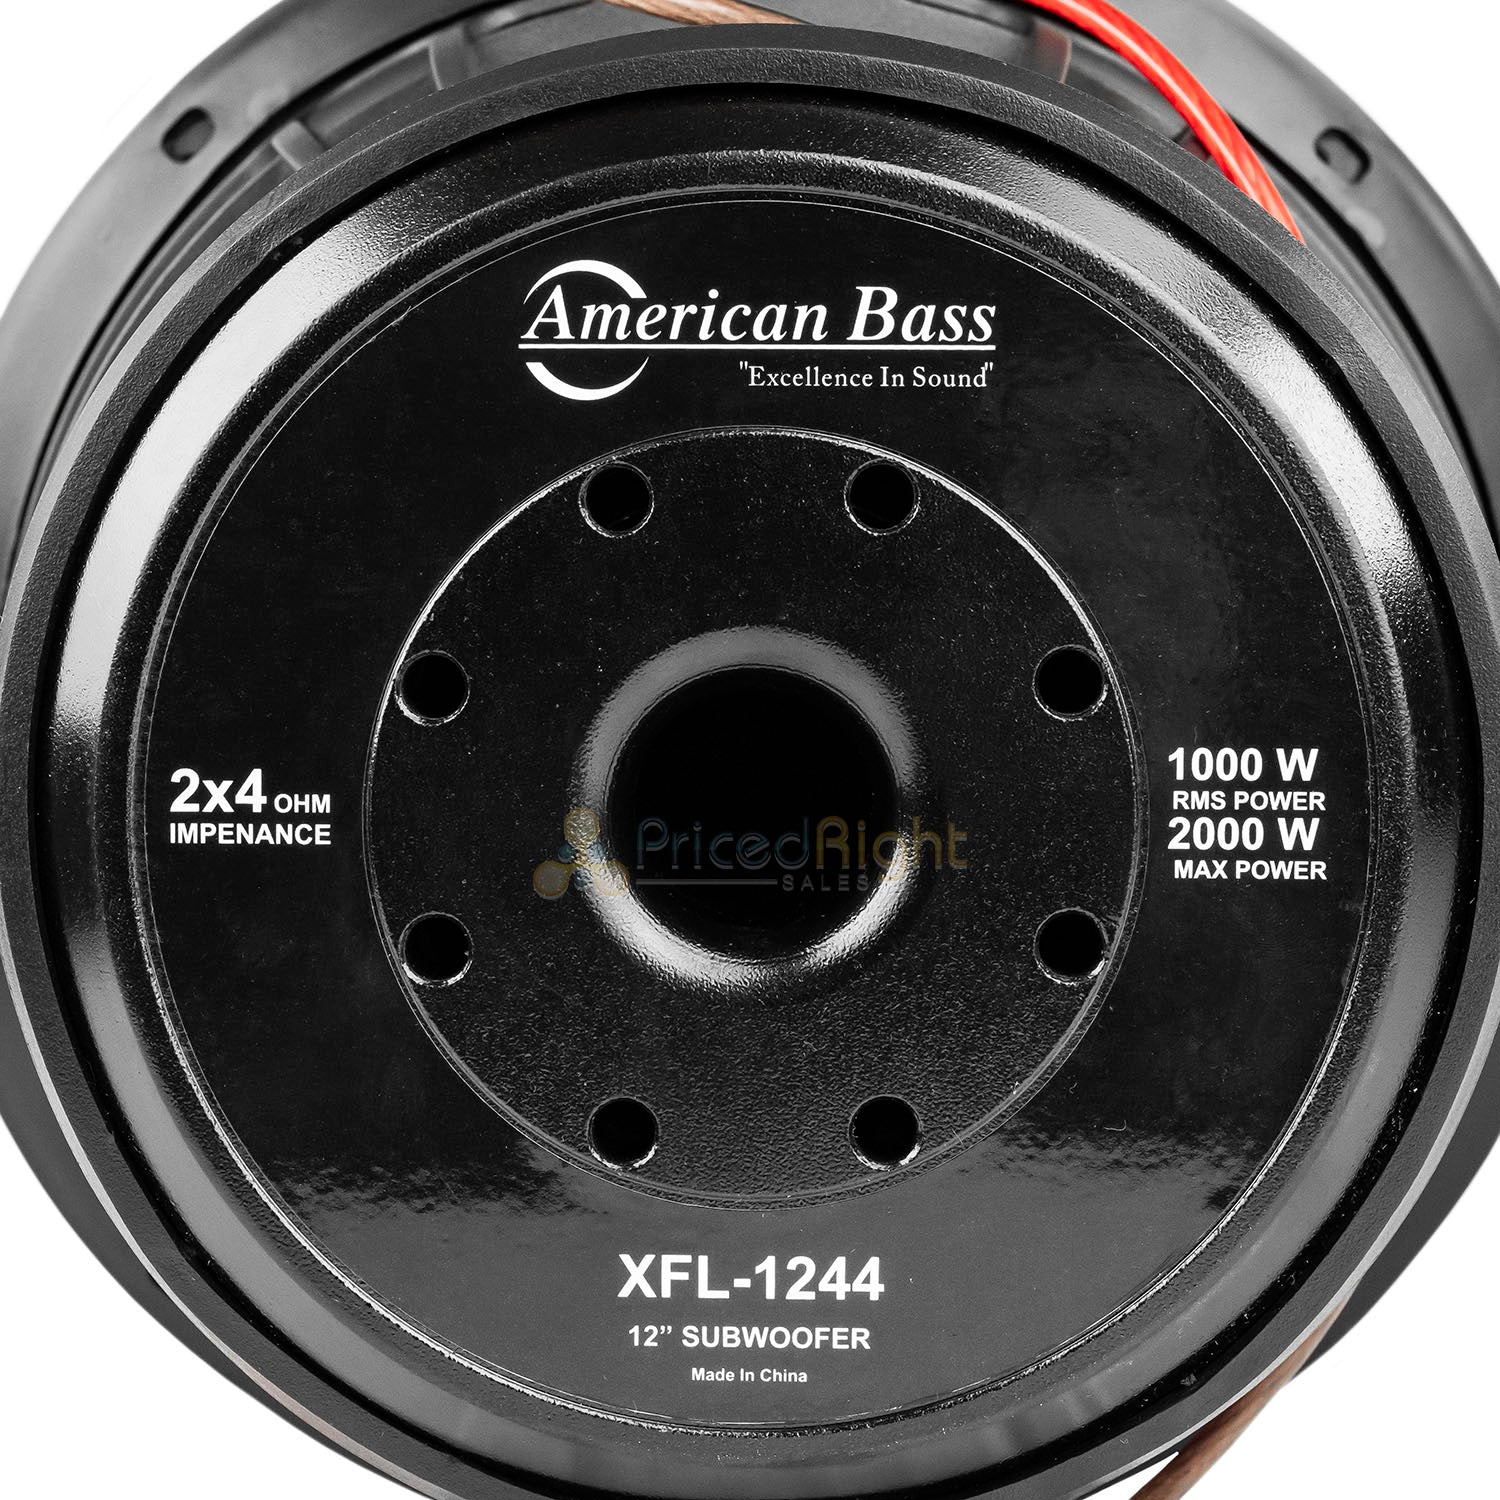 American Bass XFL-1244 12" Subwoofer Dual 4 Ohm 2000 Watts Max Car Audio Single